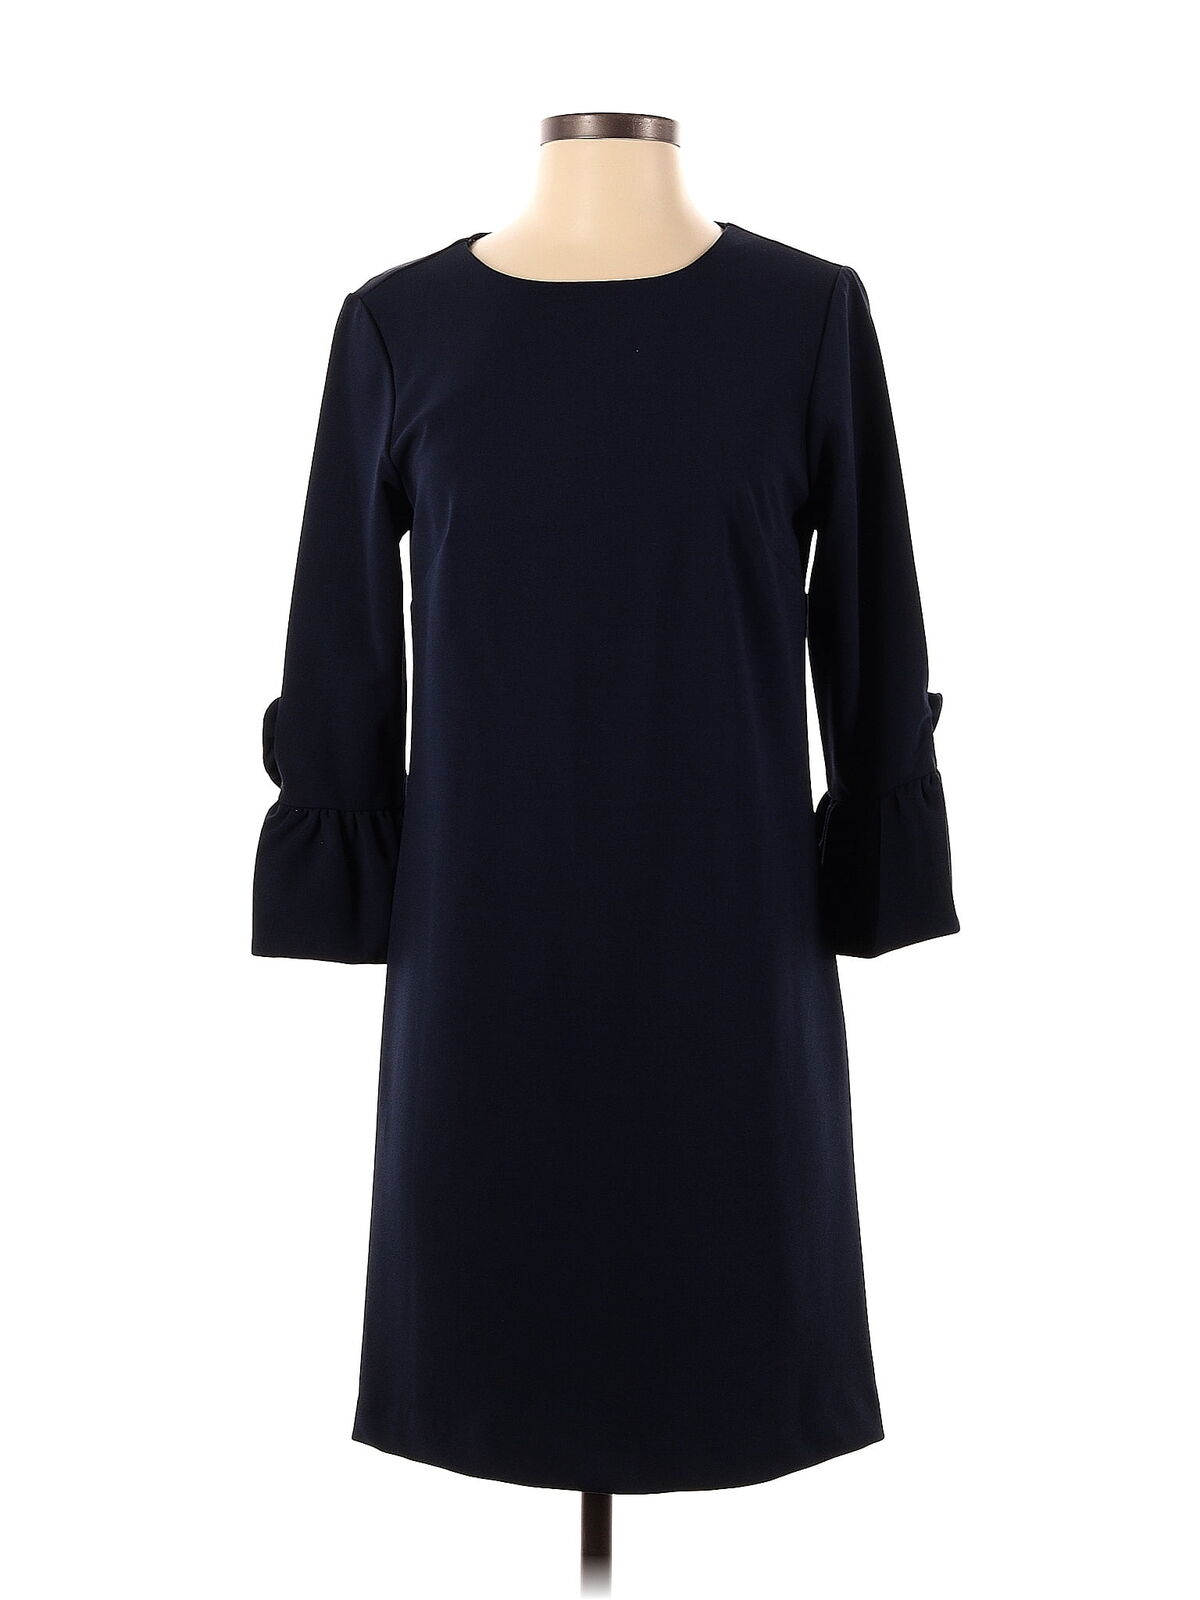 NANETTE Nanette Lepore Women Blue Casual Dress 2 - image 1